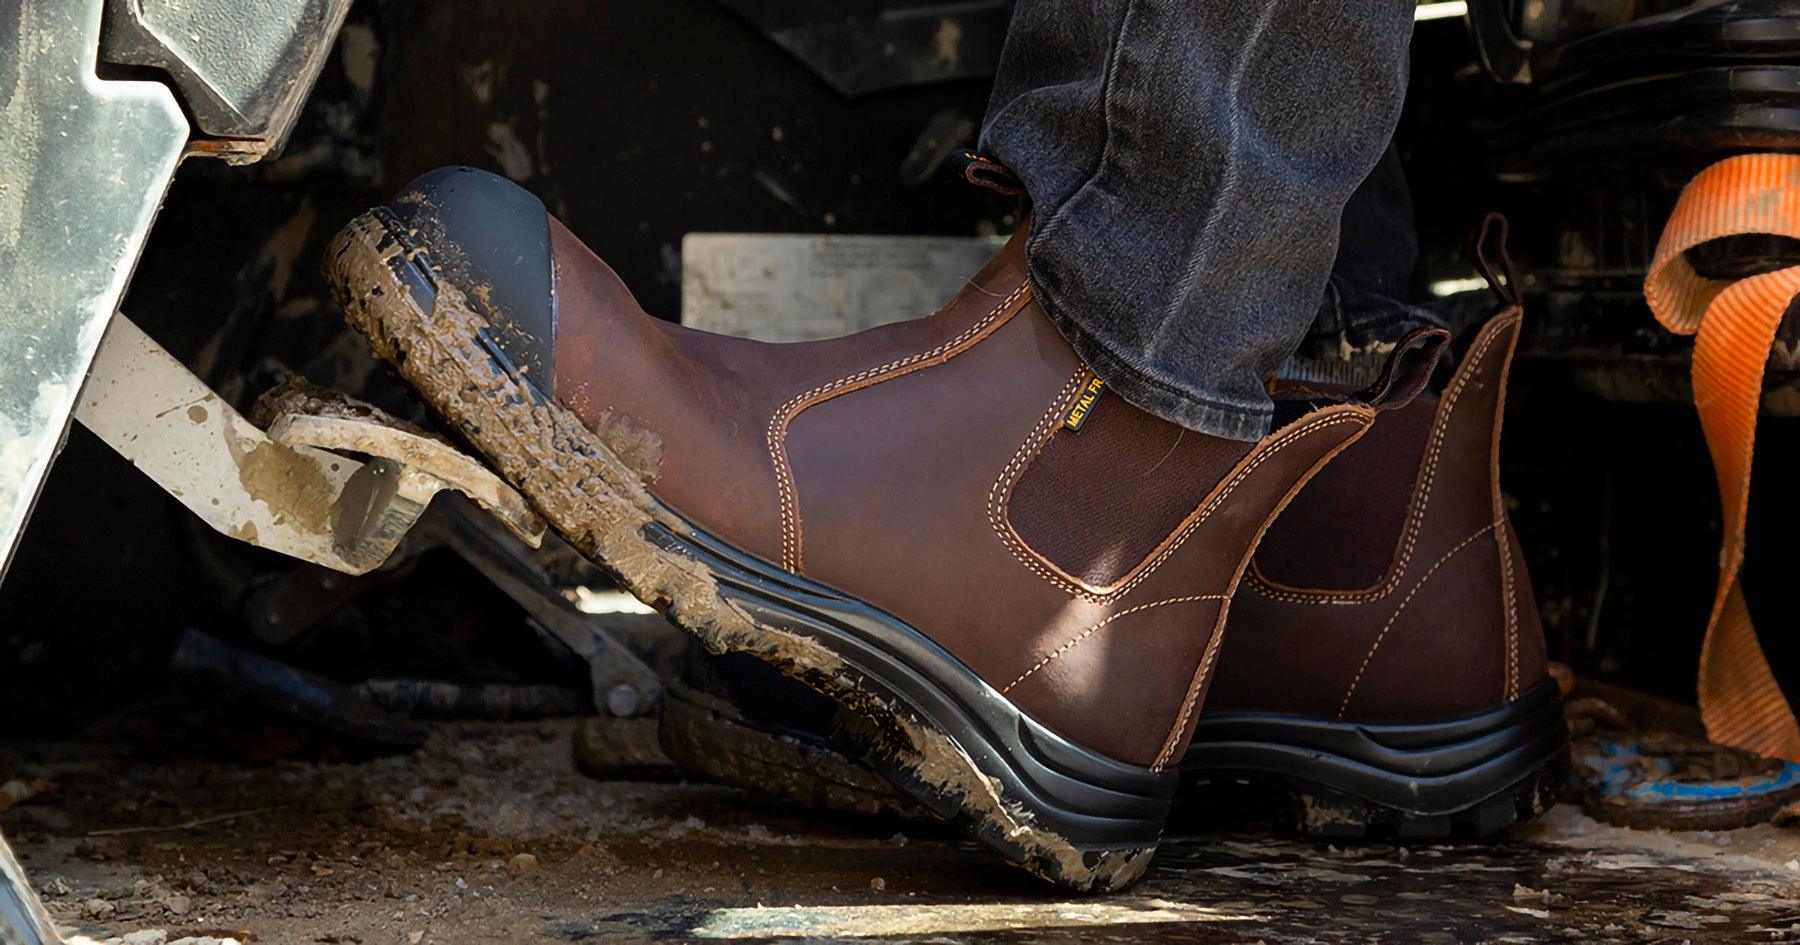 Construction Boots for Men - MooseLog